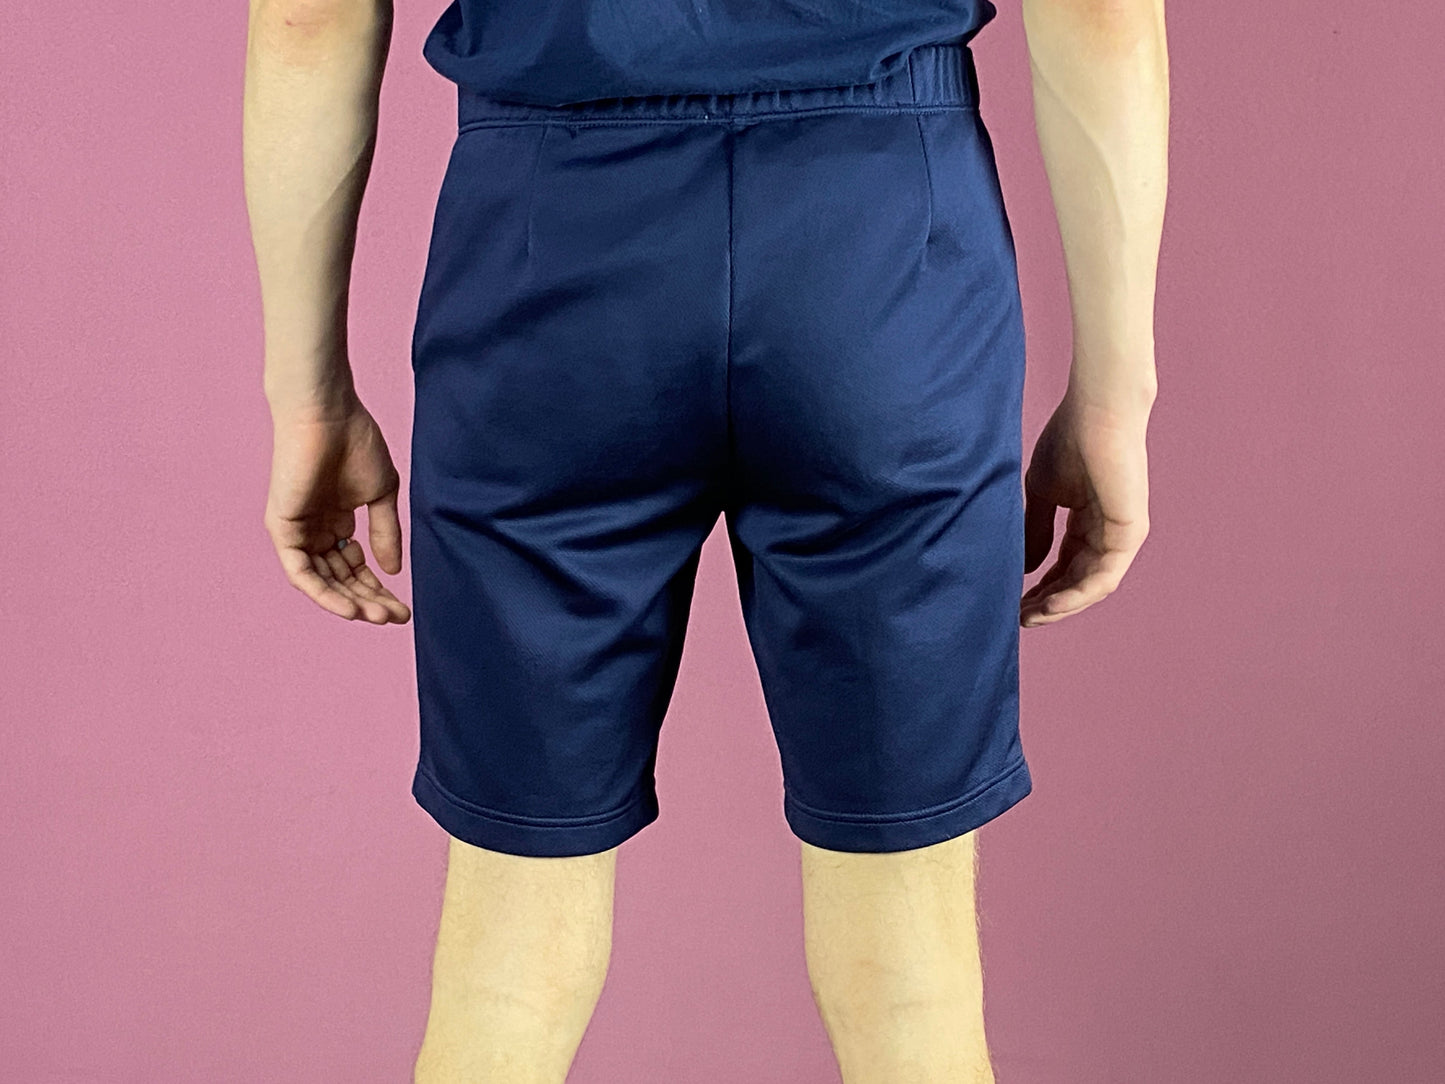 90s Asics Vintage Men's Shorts - Medium Navy Blue Polyester